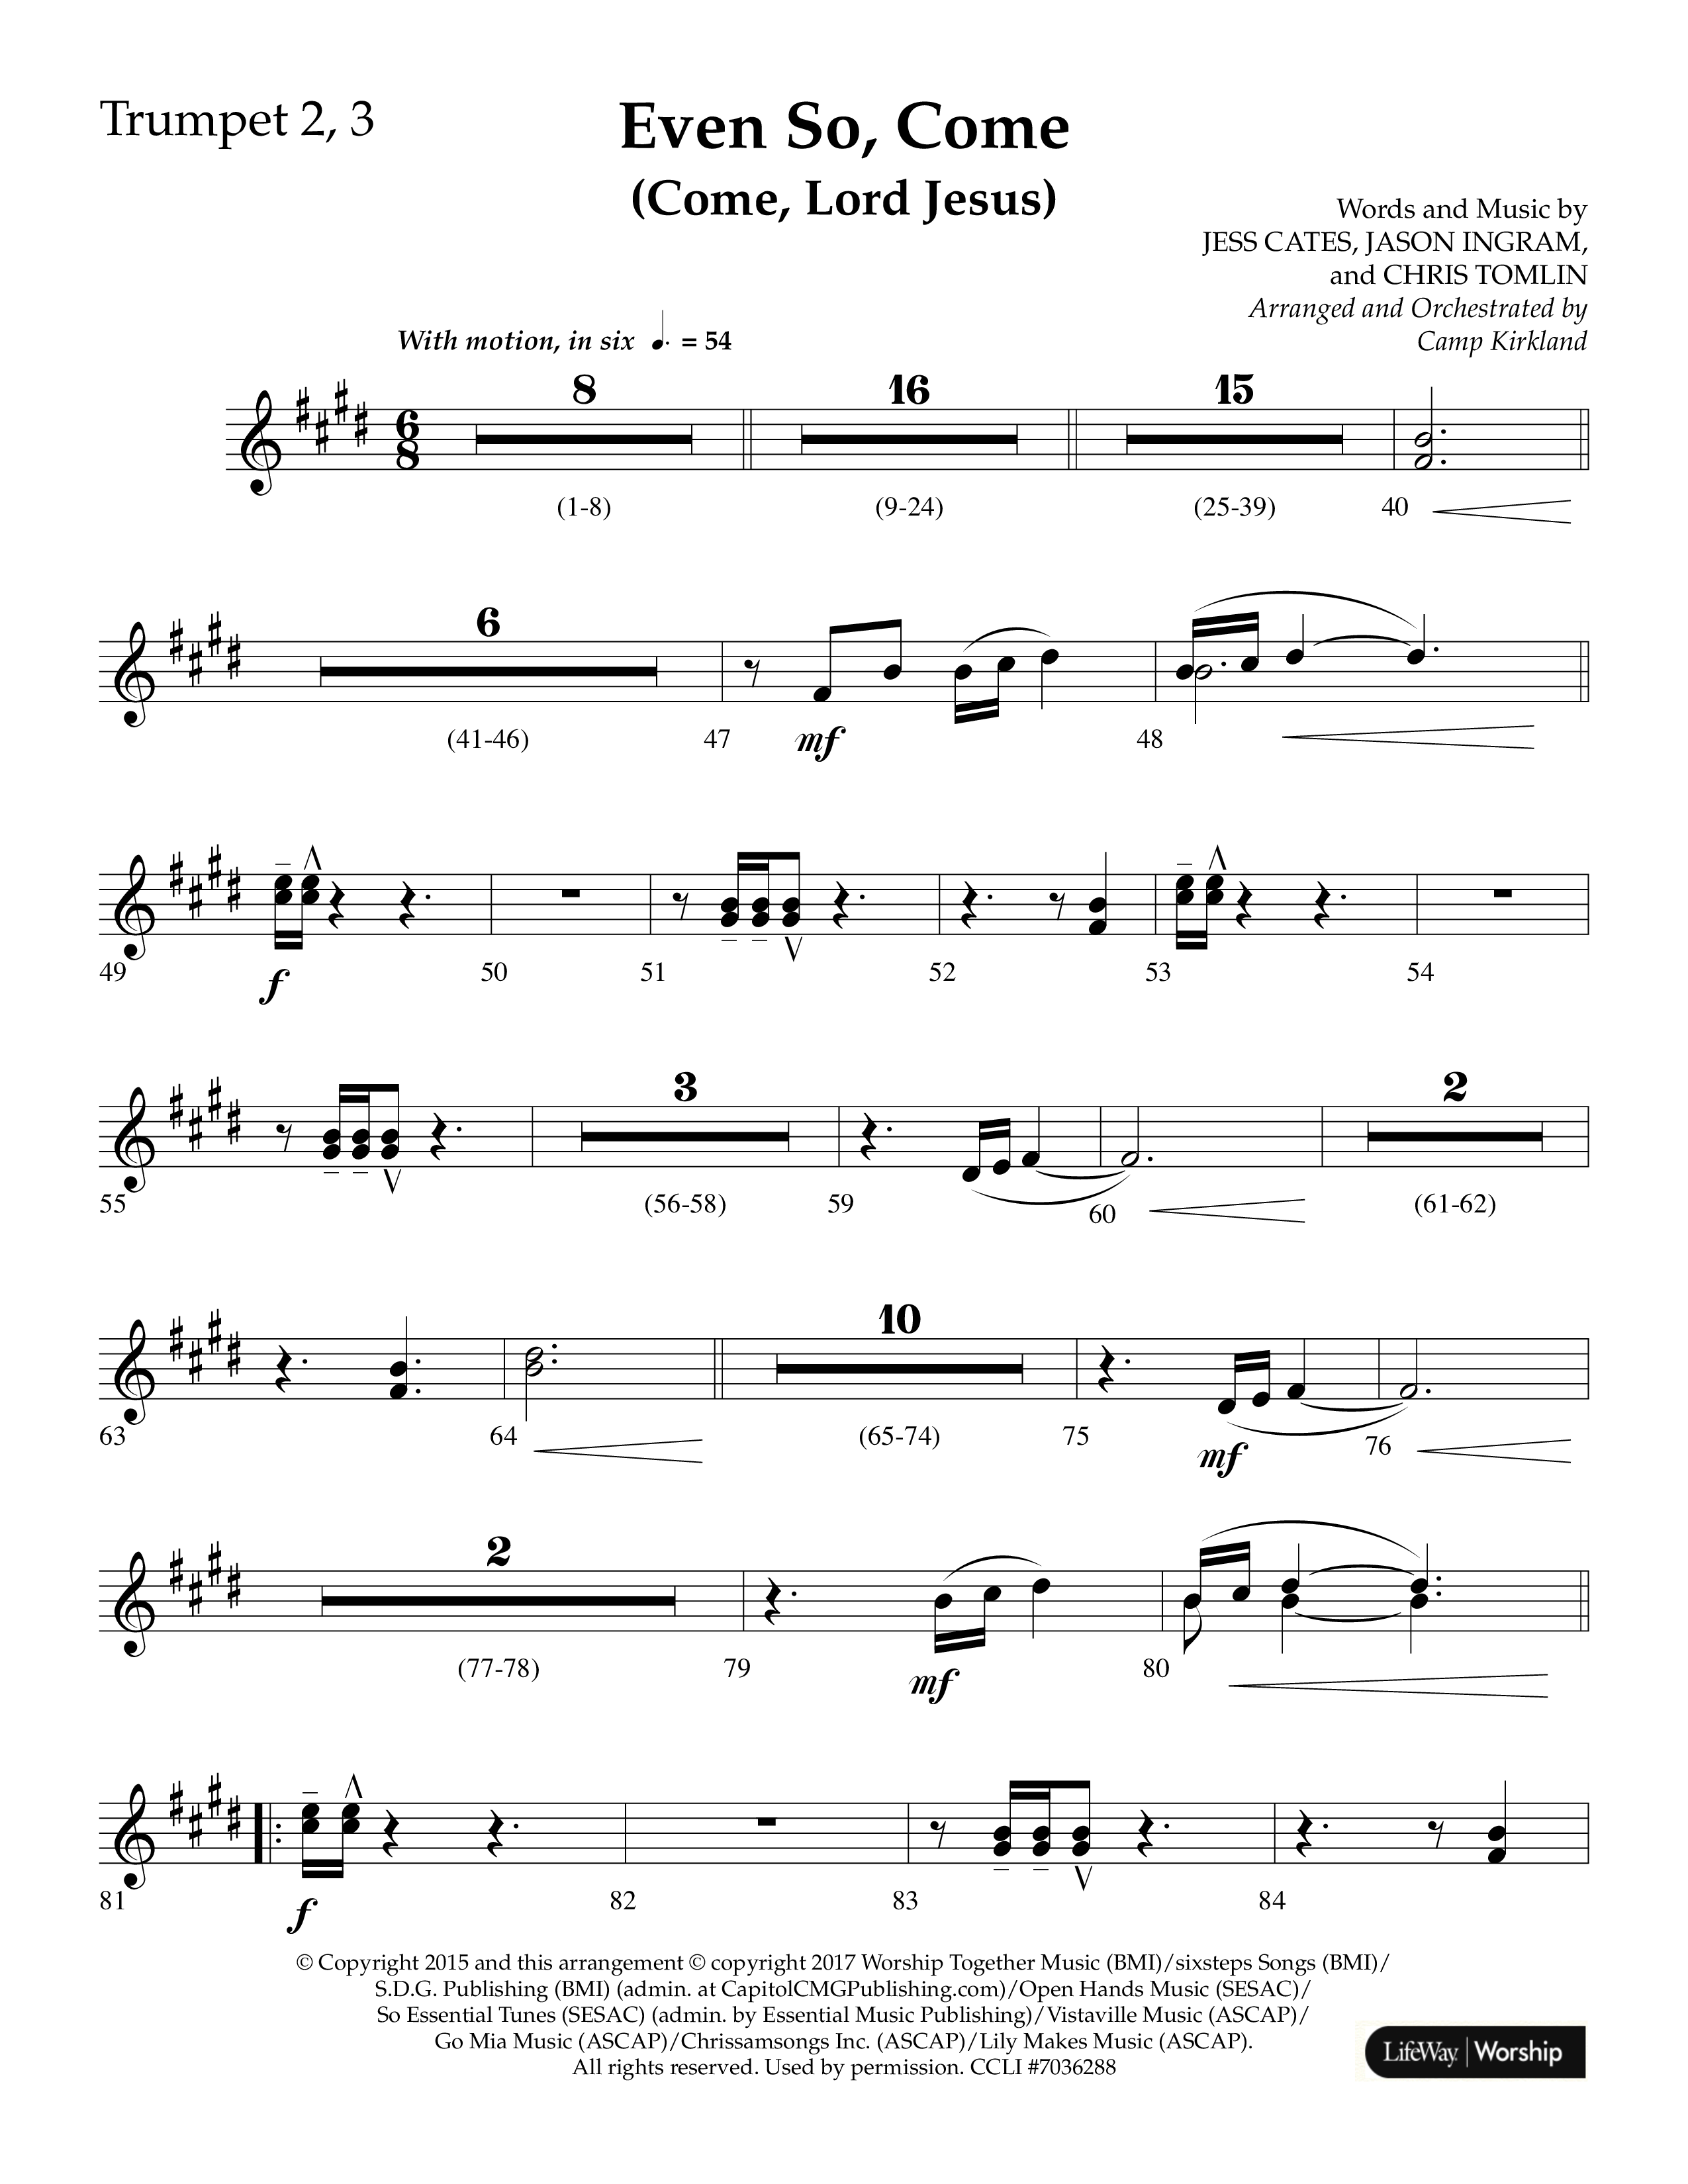 Even So Come (Choral Anthem SATB) Trumpet 2/3 (Lifeway Choral / Arr. Camp Kirkland)